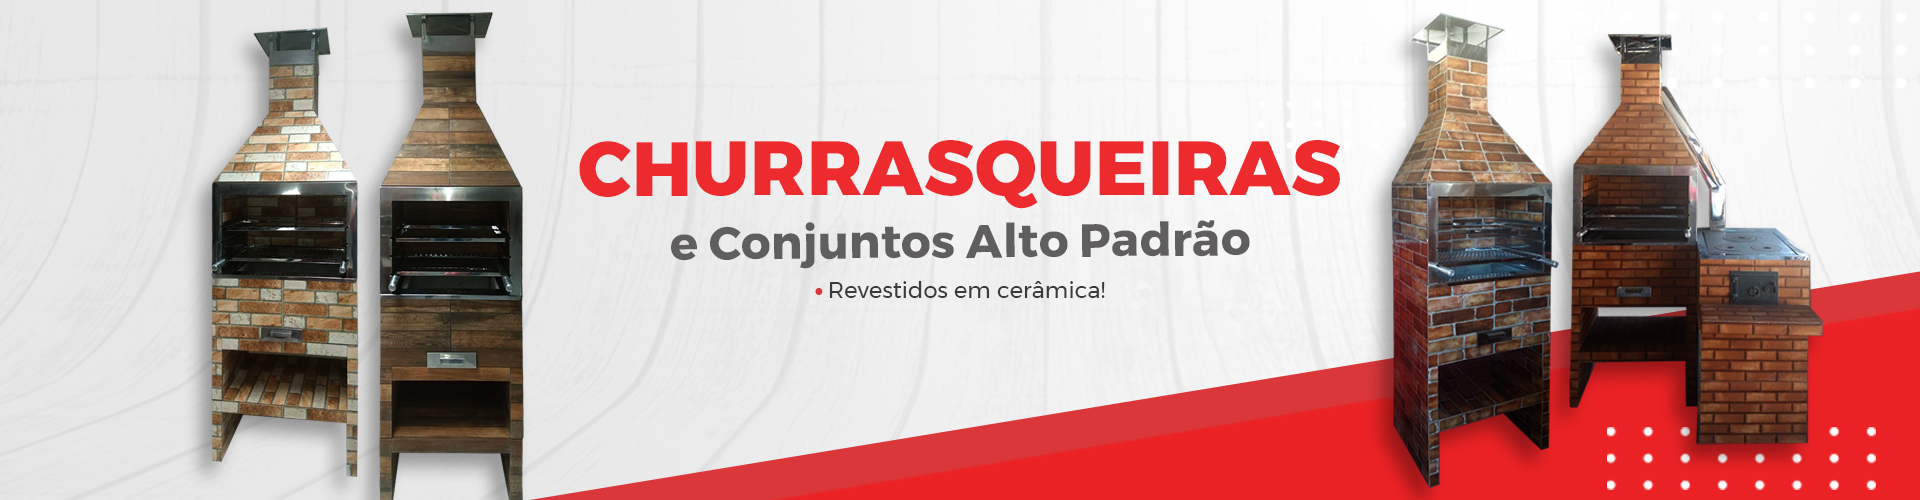 banner_churras_alto_padrao